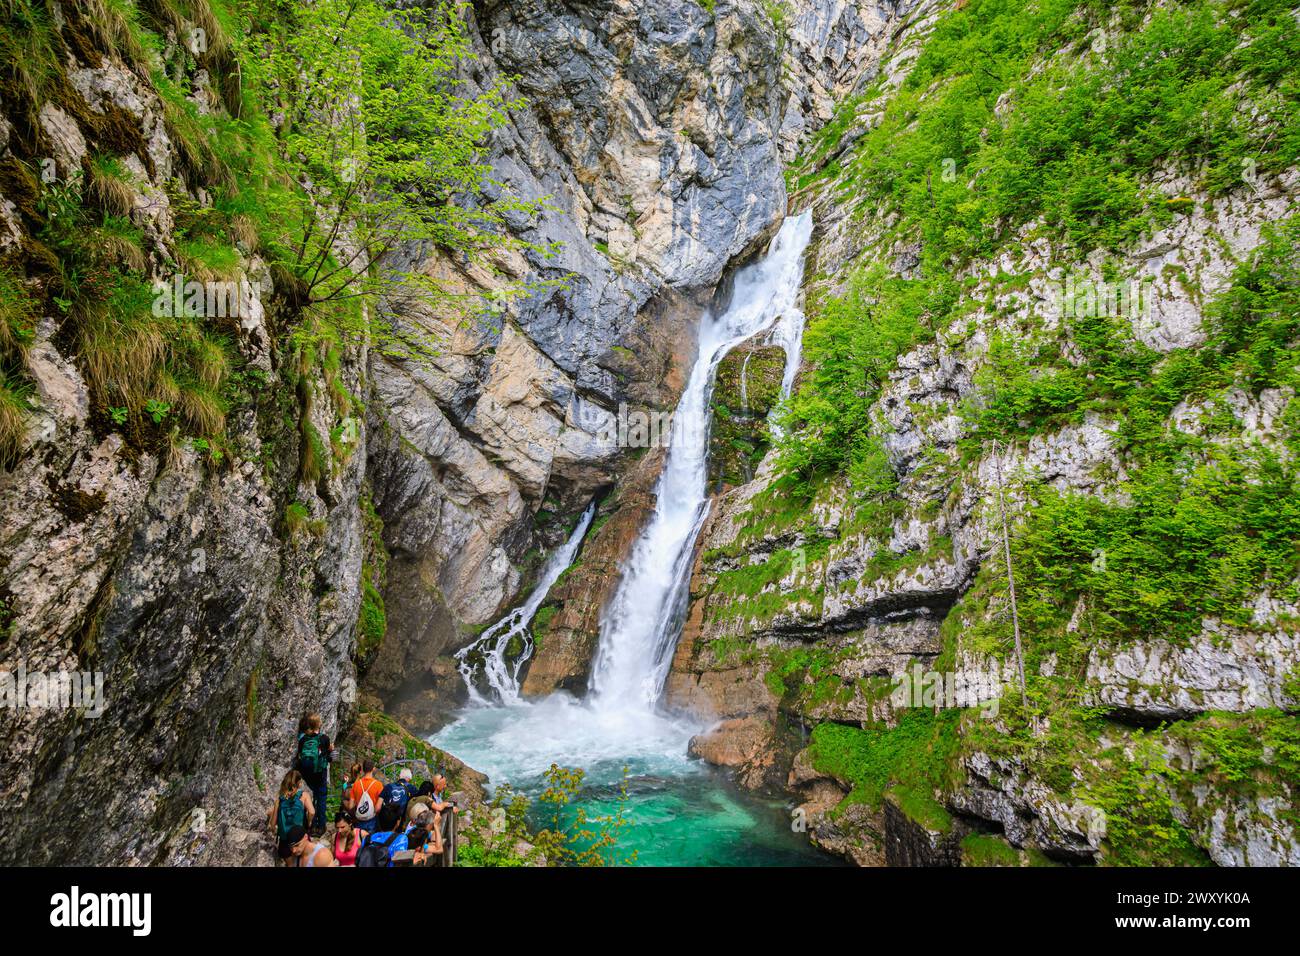 Slap Savica (Savica Falls) at Lake Boninj, a popular tourist attraction in north-west Slovenia, central & eastern Europe Stock Photo